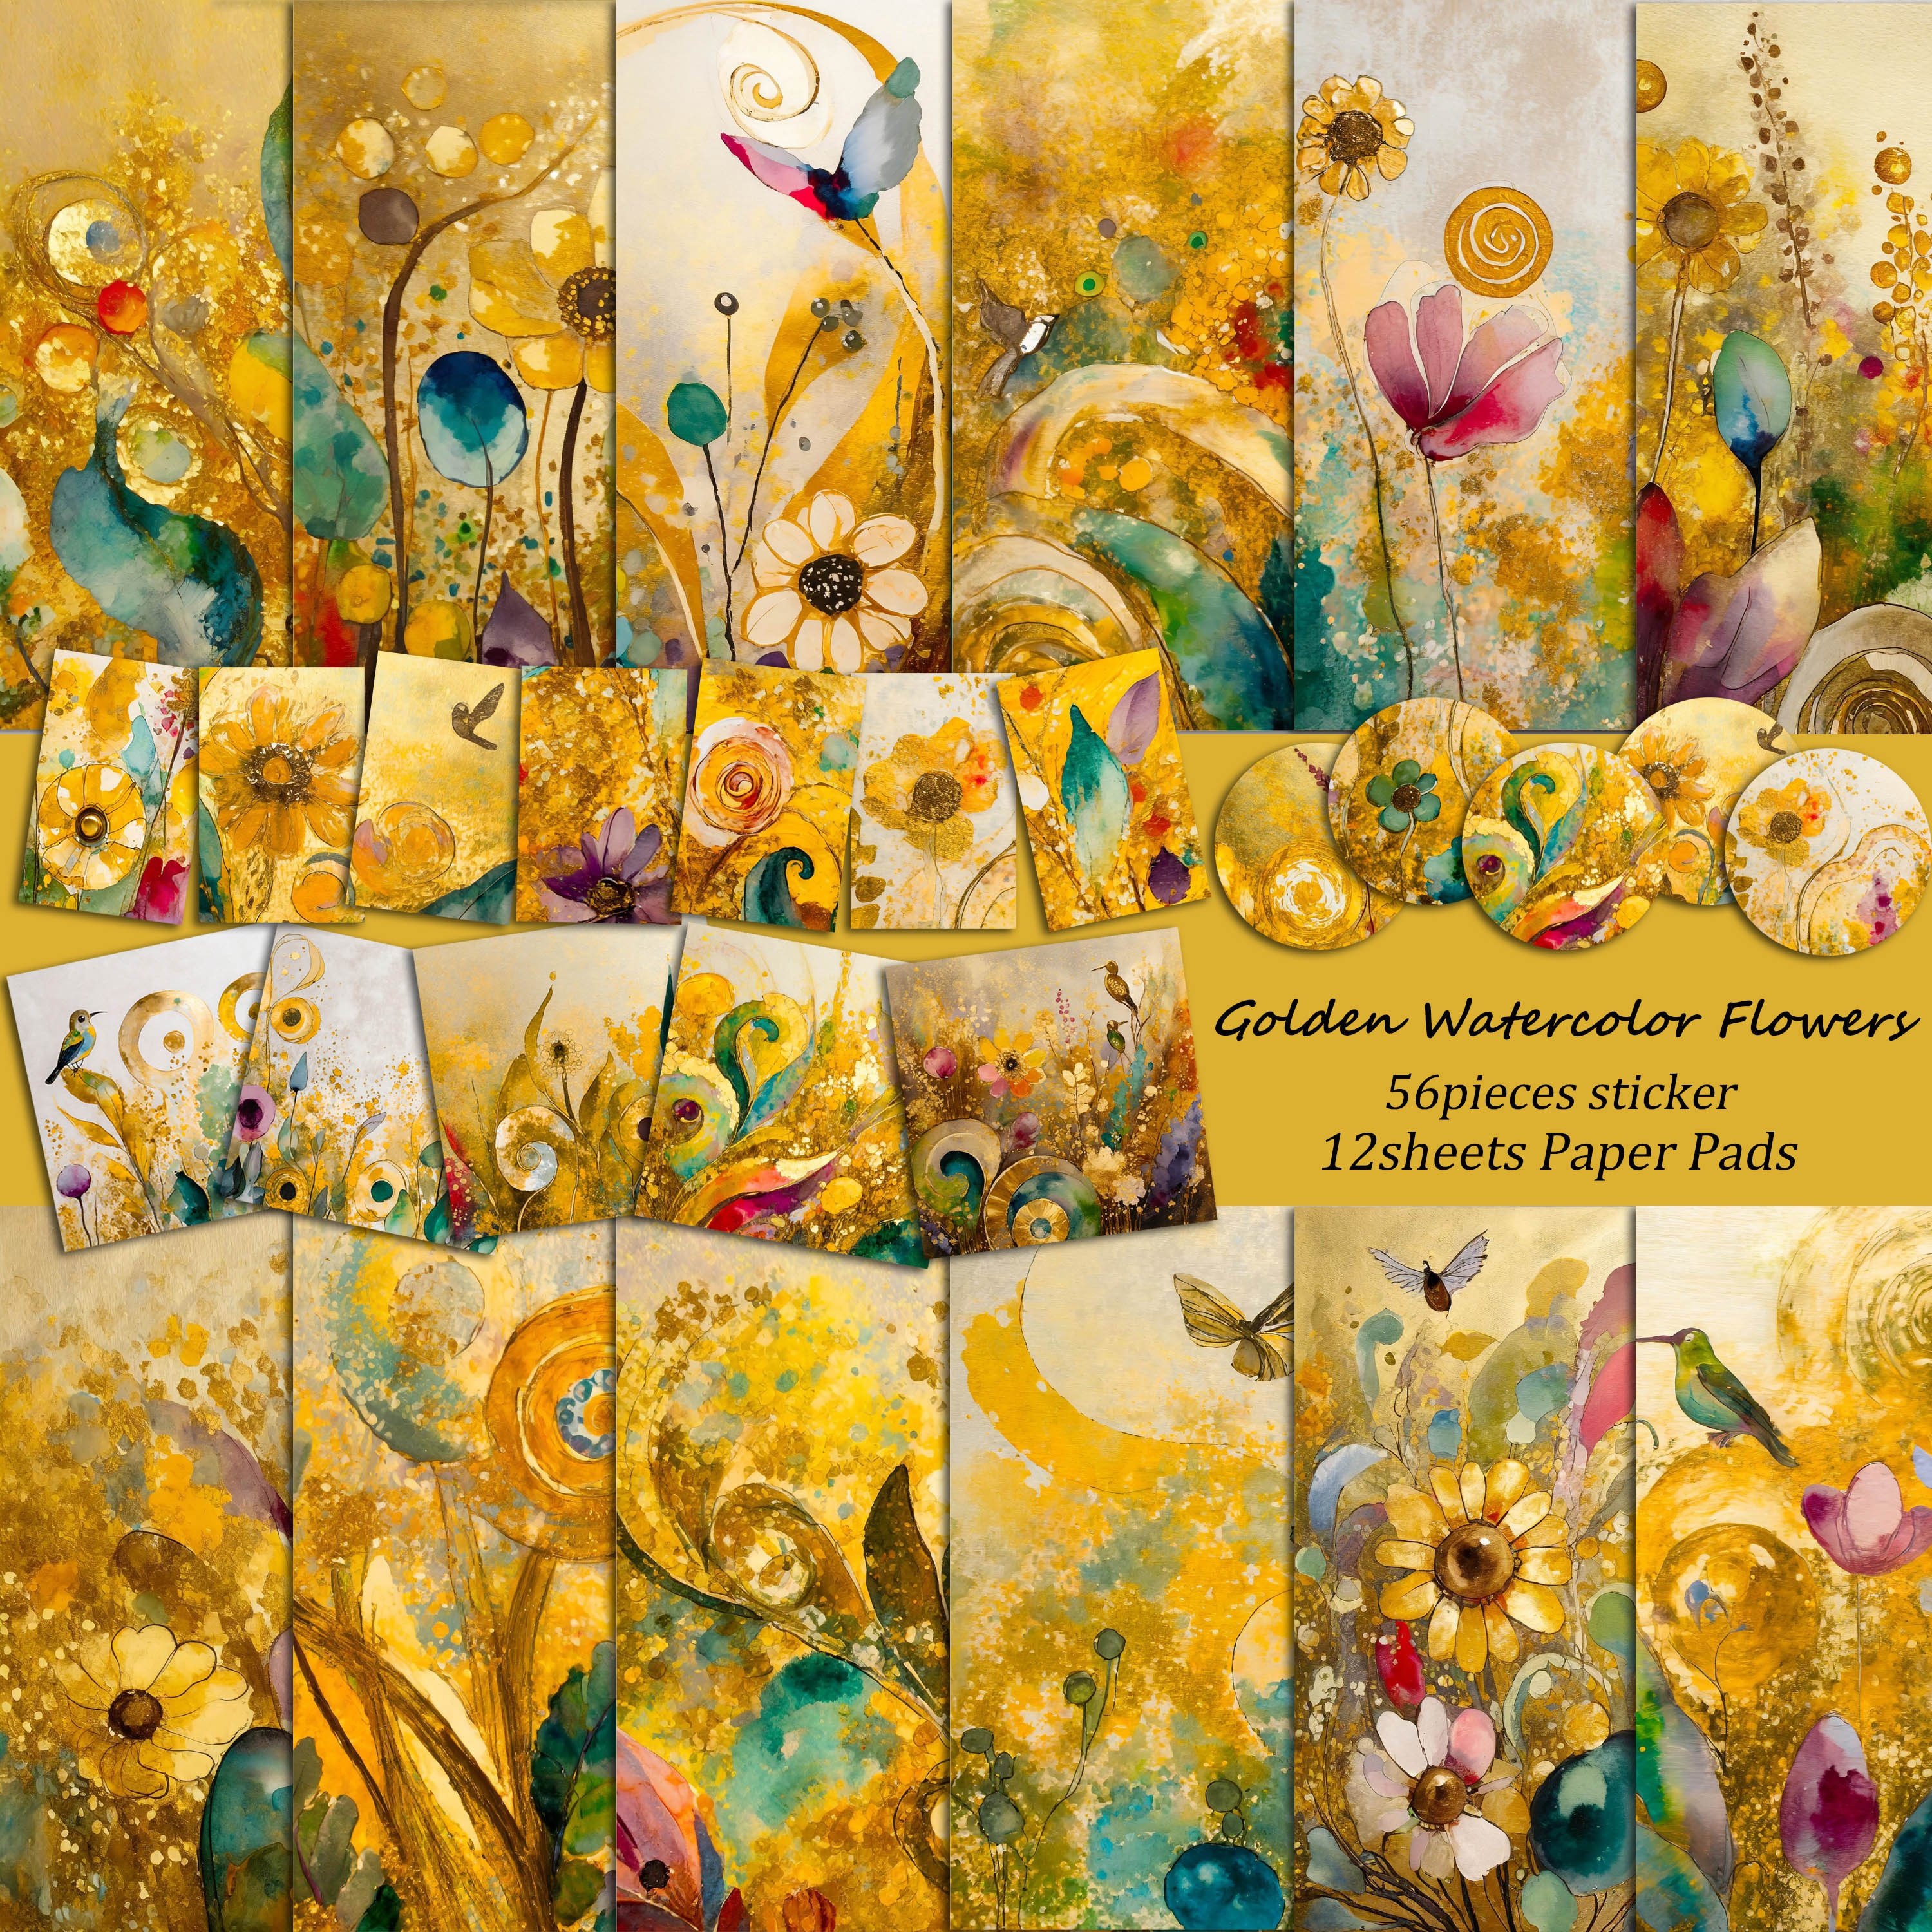 

68pcs(12paper Pads+56stickers) Golden Watercolor Flowers Diy Scrapbook Set, Perfect For Mini Gift Packaging, Bullet Journals, Arts Crafts, Scrapbooking Supplies, Junk Journal, Greeting Card